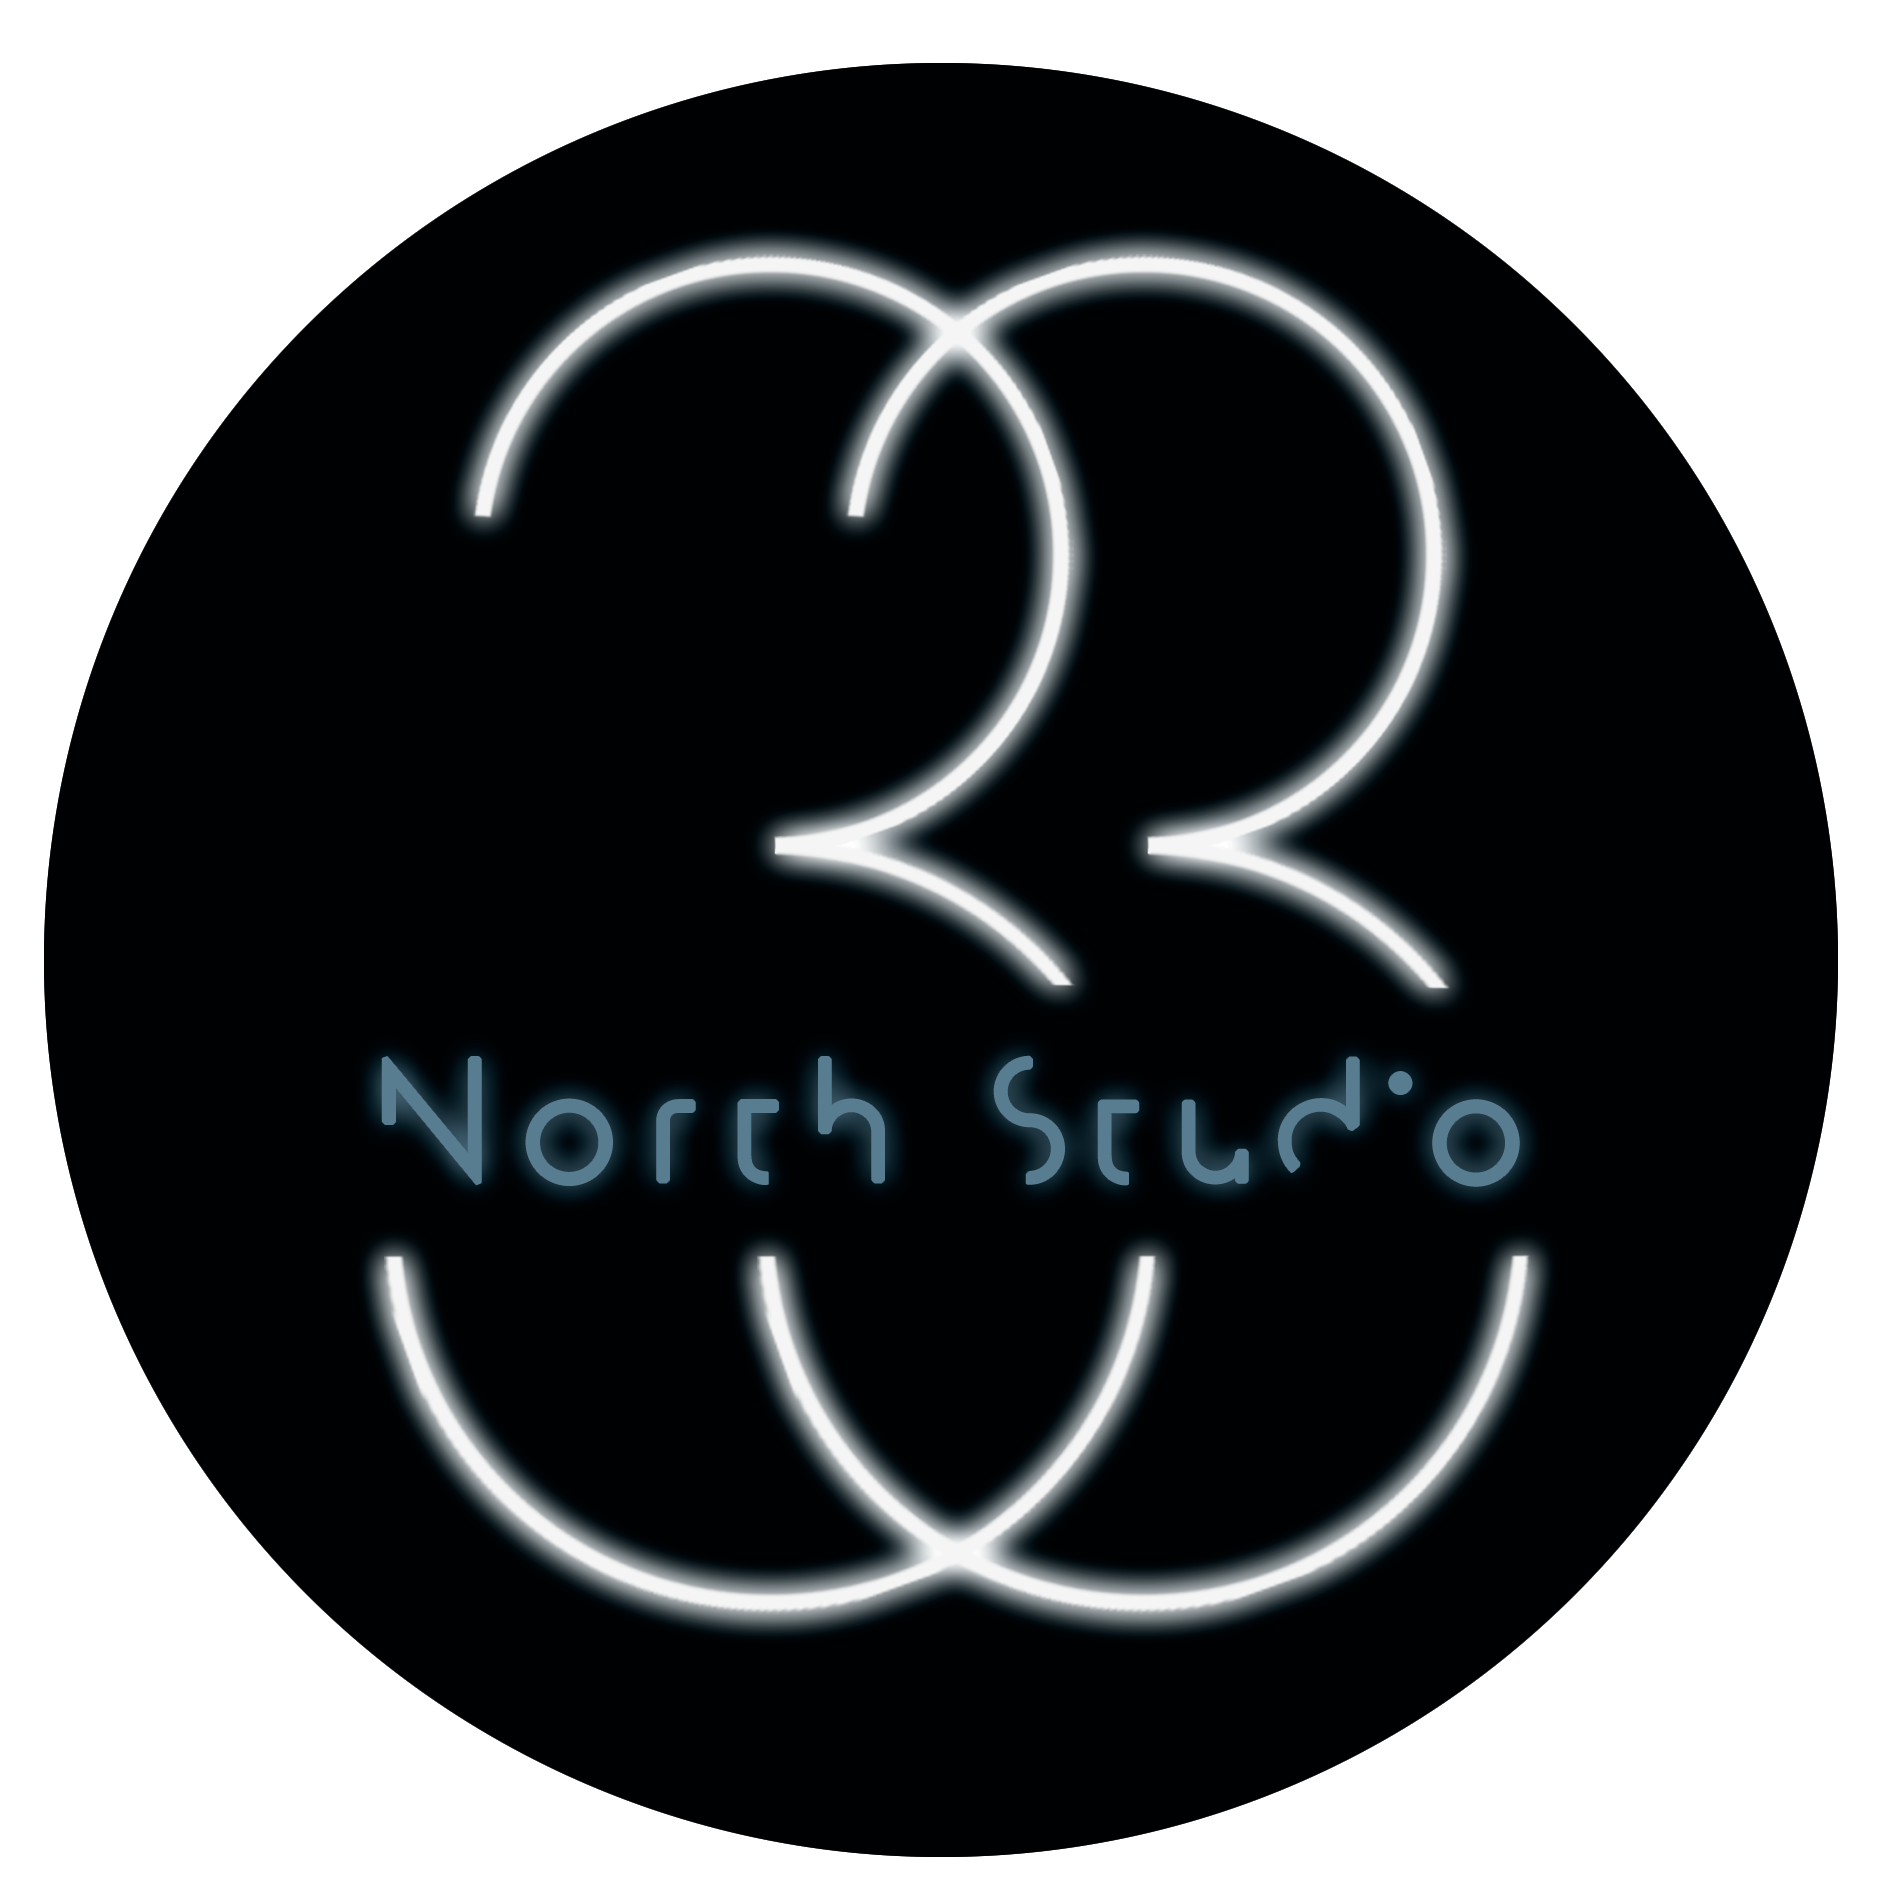 33North Studio